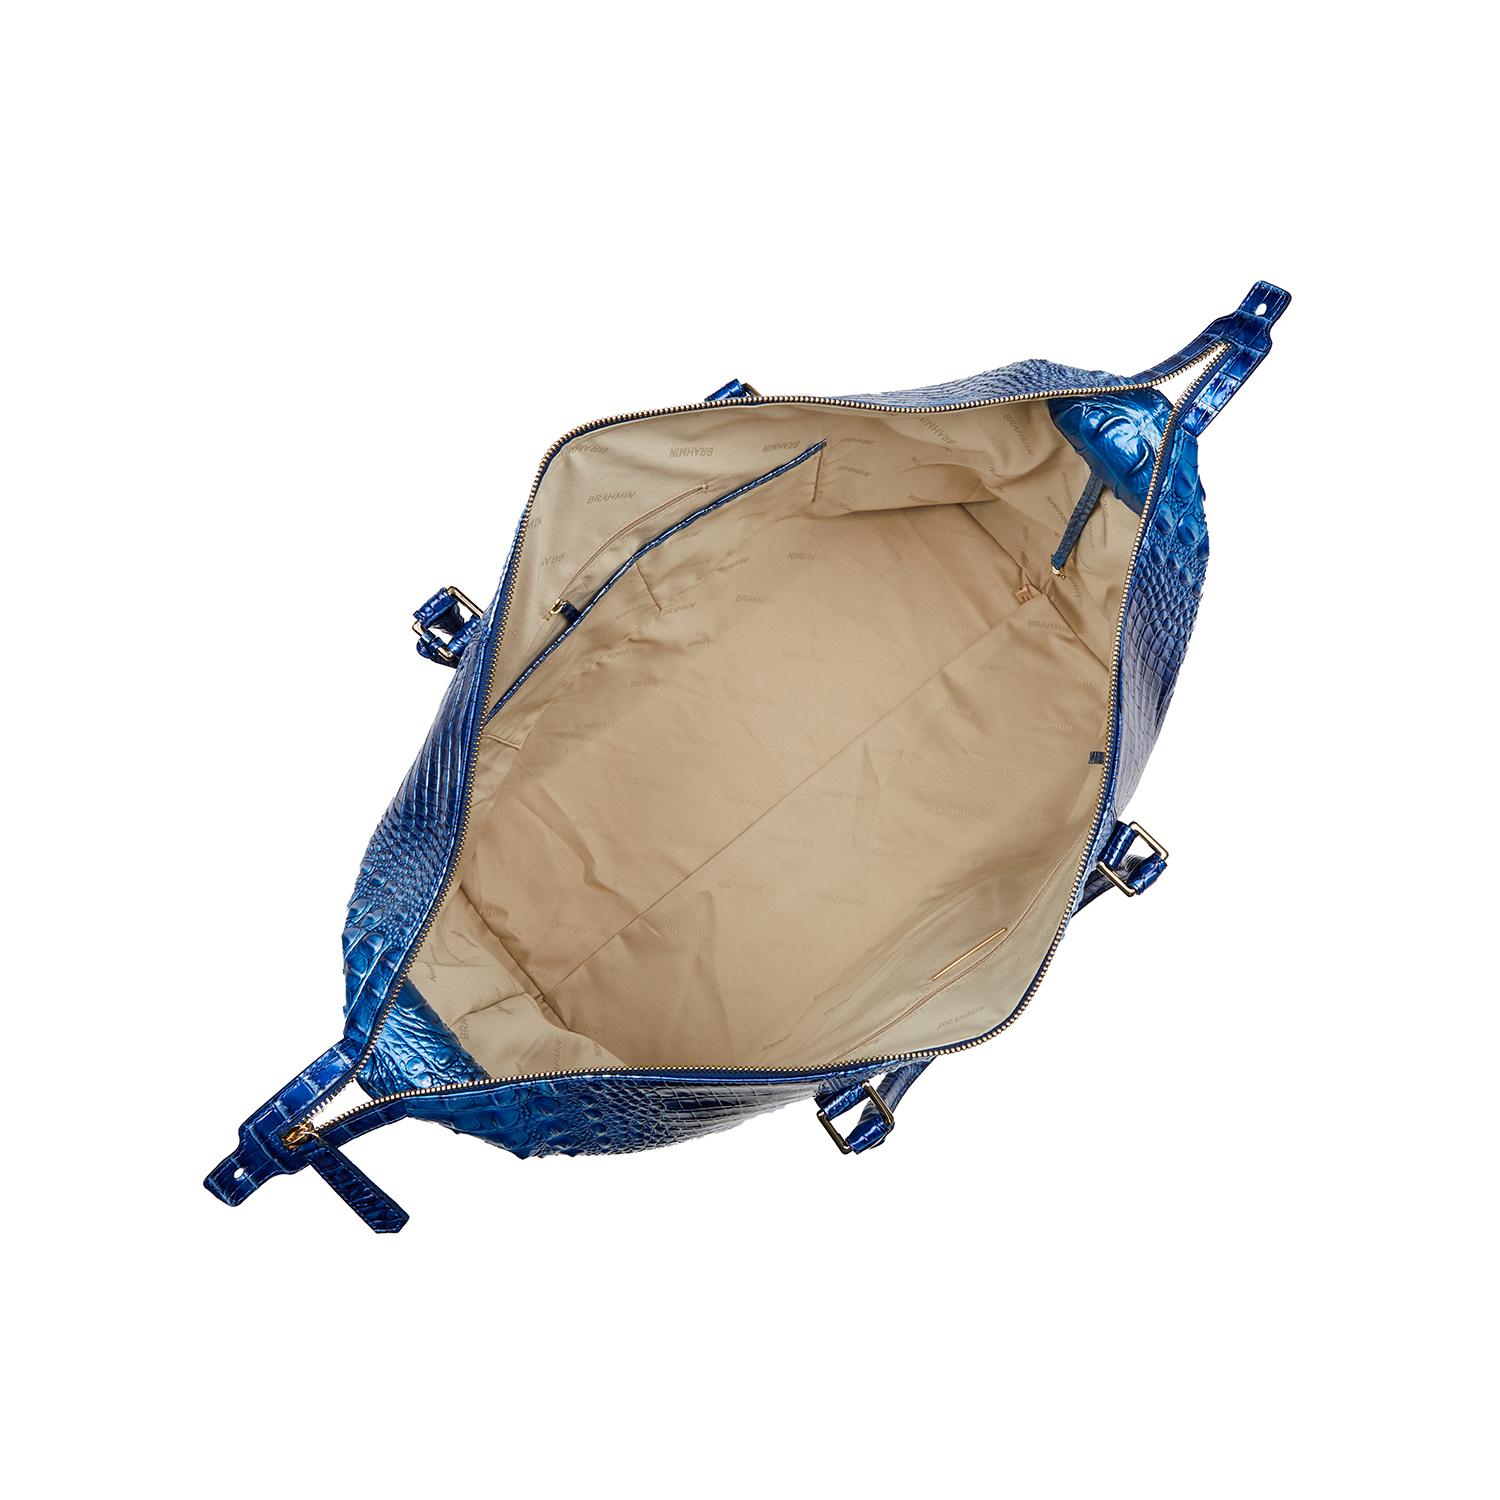 Brahmin Ombre Melbourne Duxbury Weekender Duffle Bag in Blue